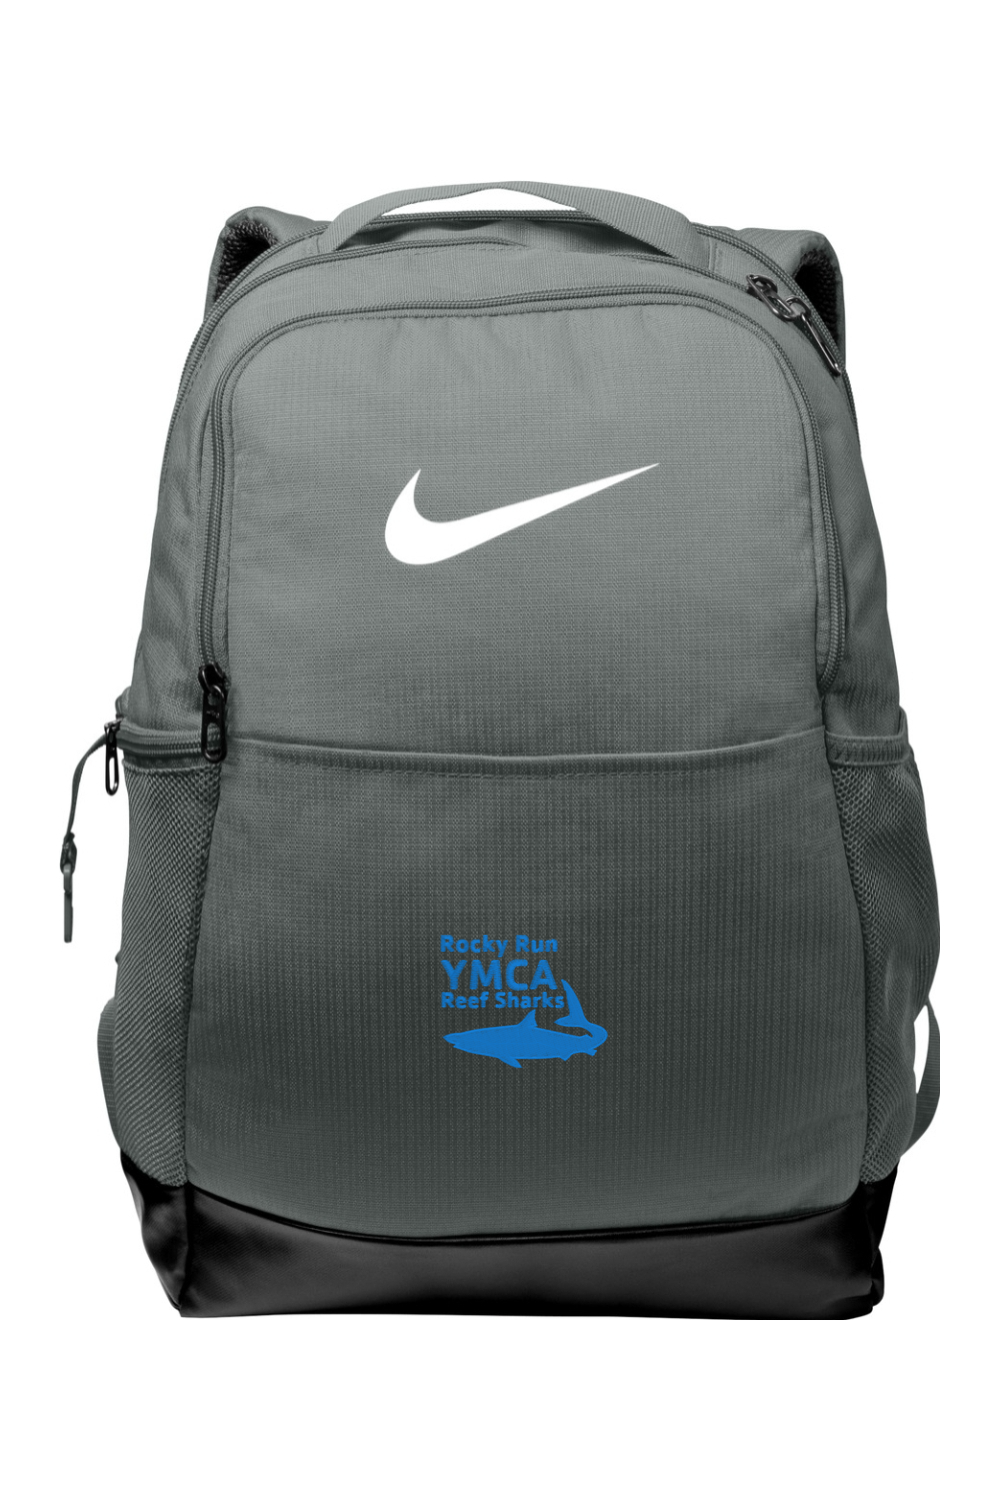 ROCKY RUN Nike Brasilia Medium Backpack